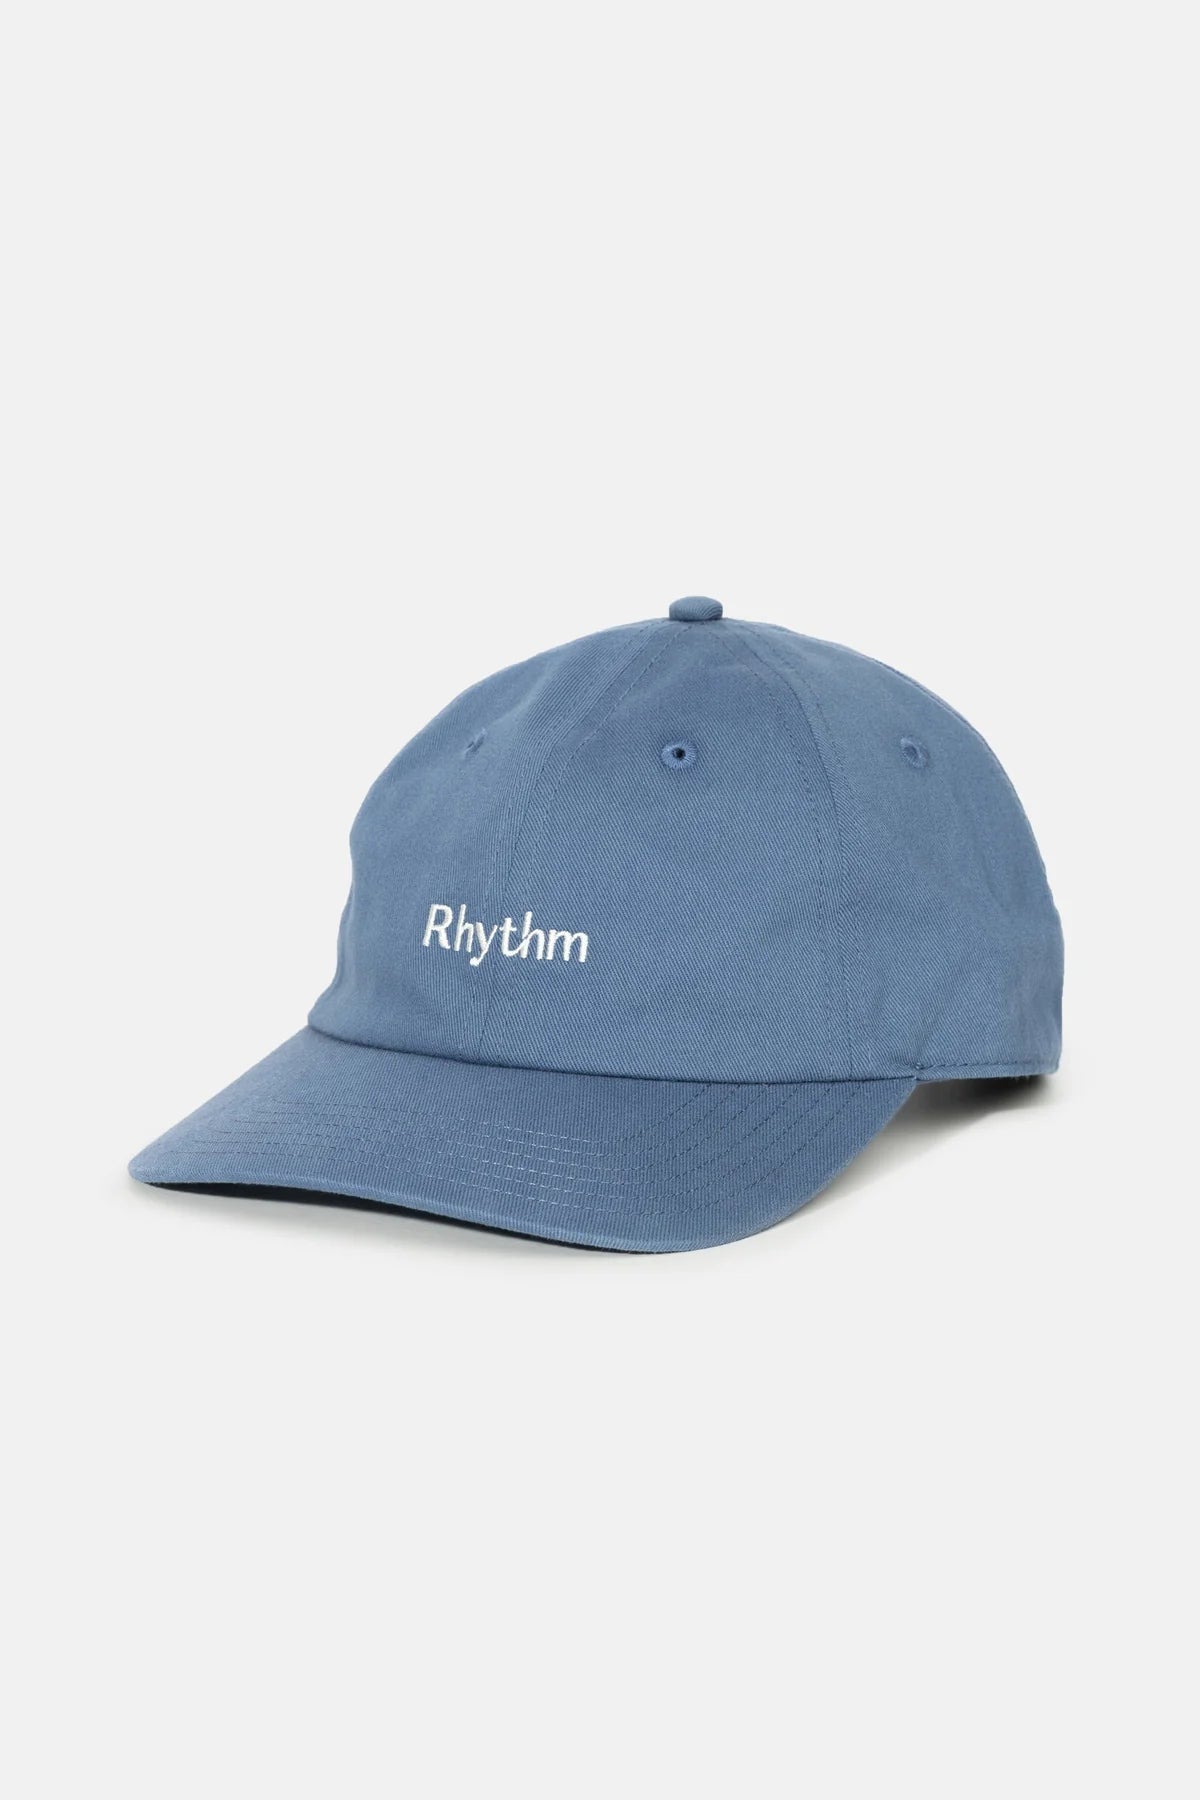 Rhythm Essential Cap Slate | Men Collective 